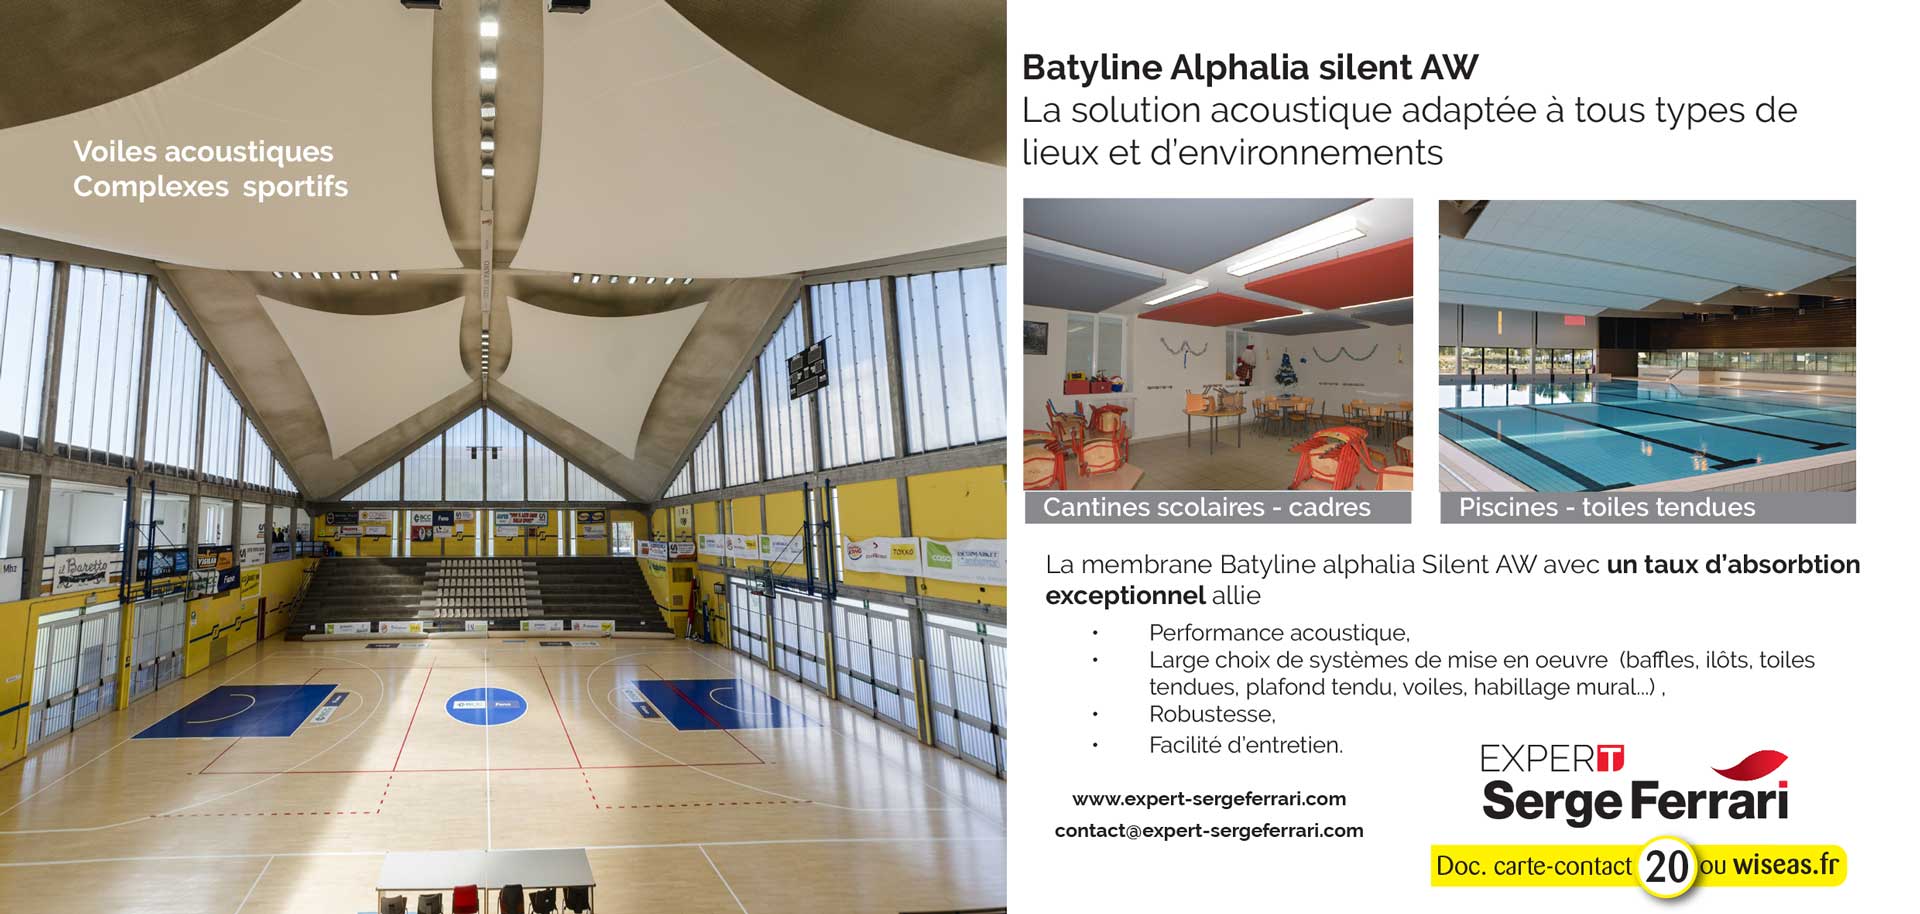 Batyline Aw - alphalia - silent